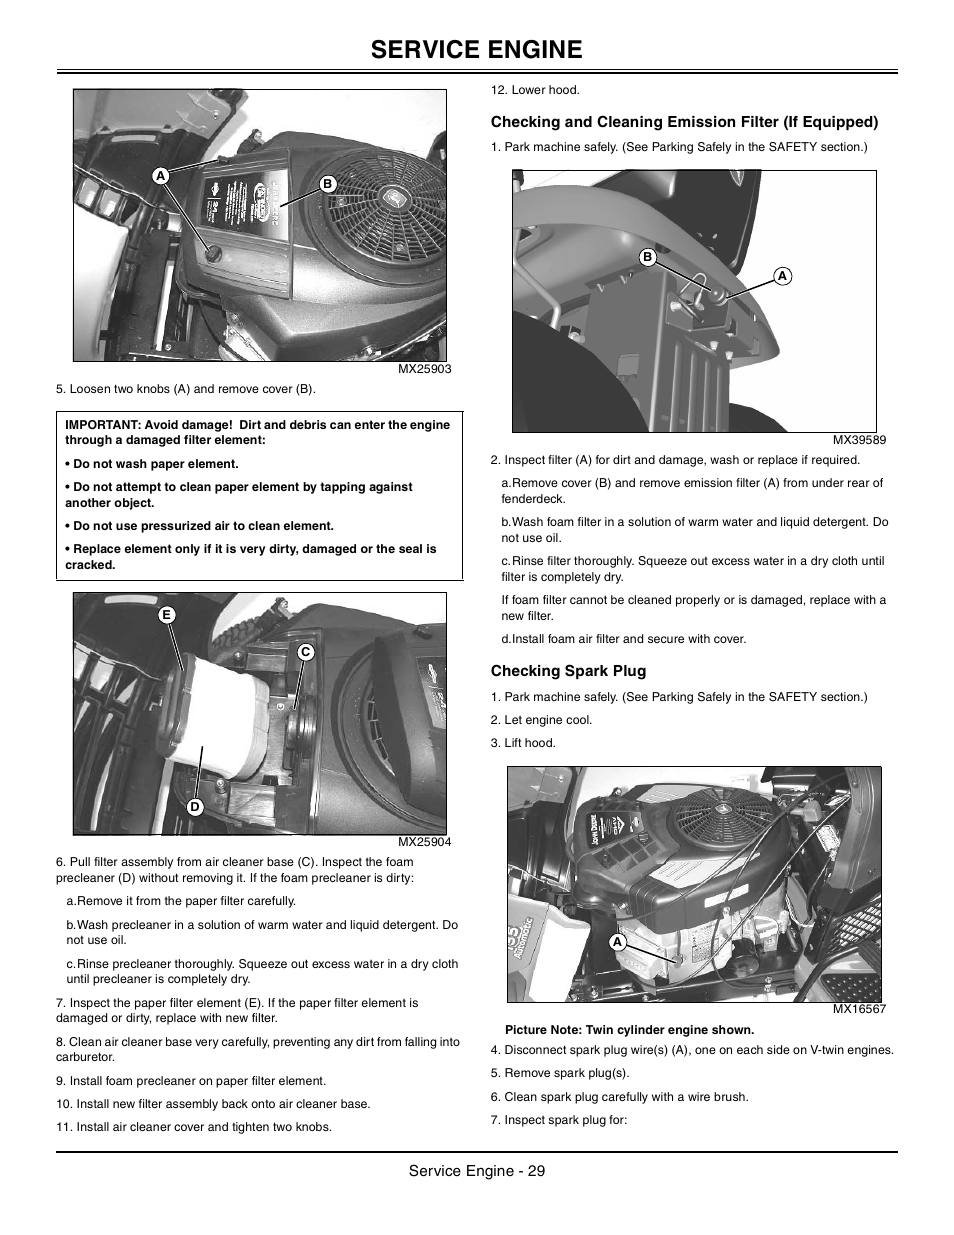 Checking spark plug, Service engine | John Deere la105 User Manual | Page 30 / 52